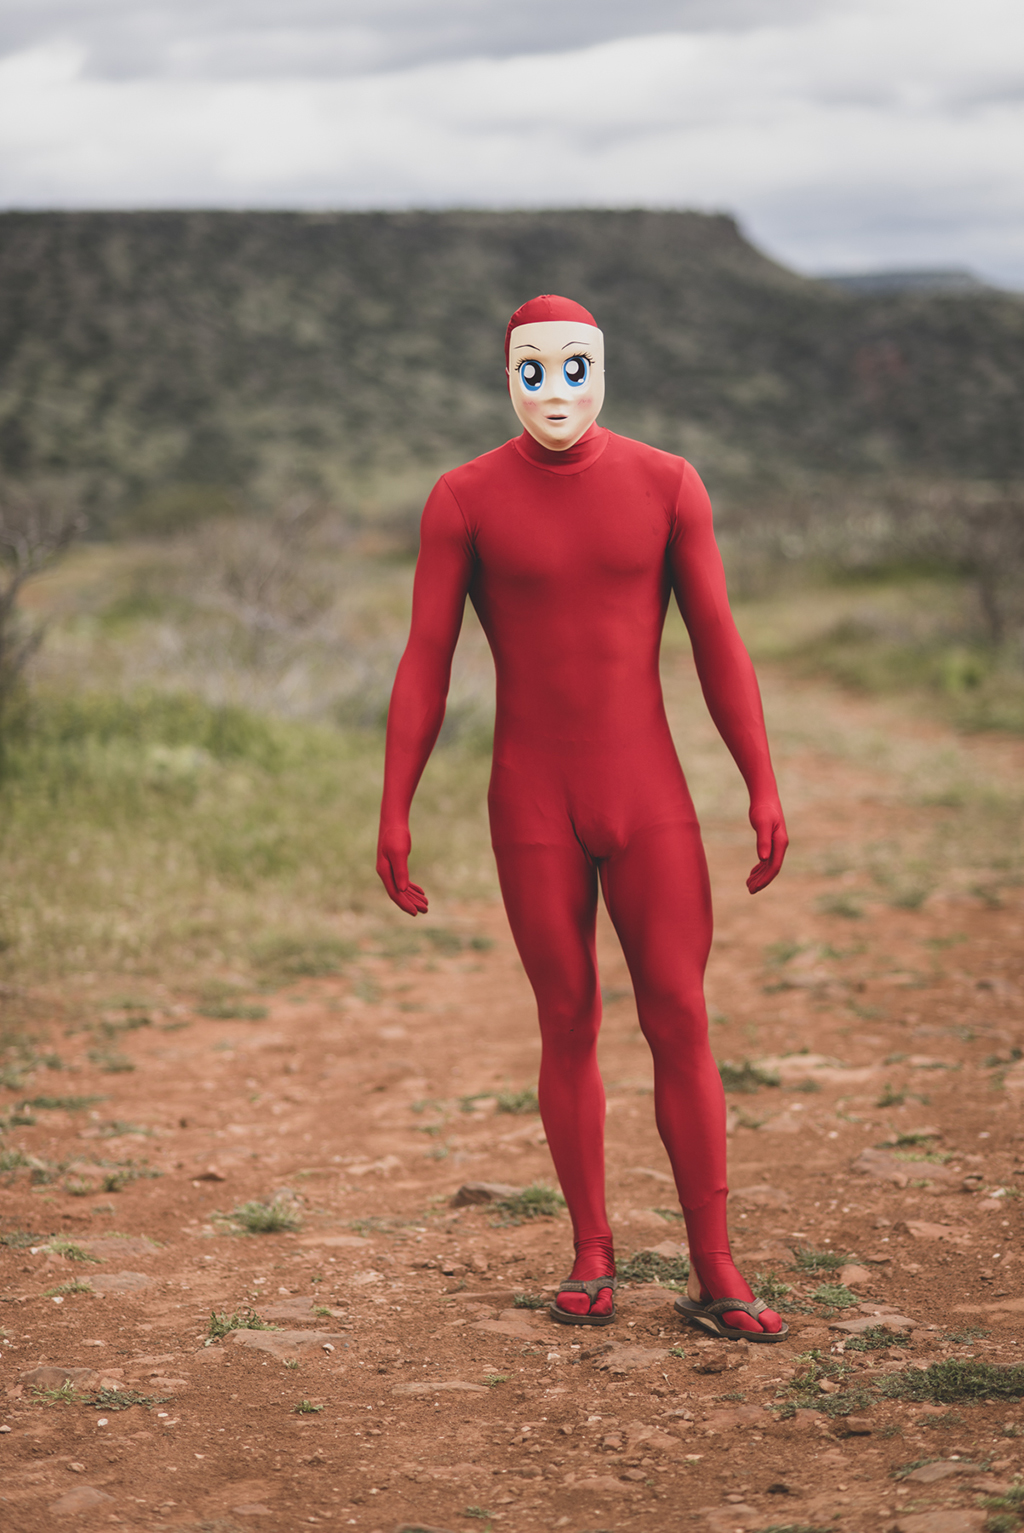 Adam in the redman suit